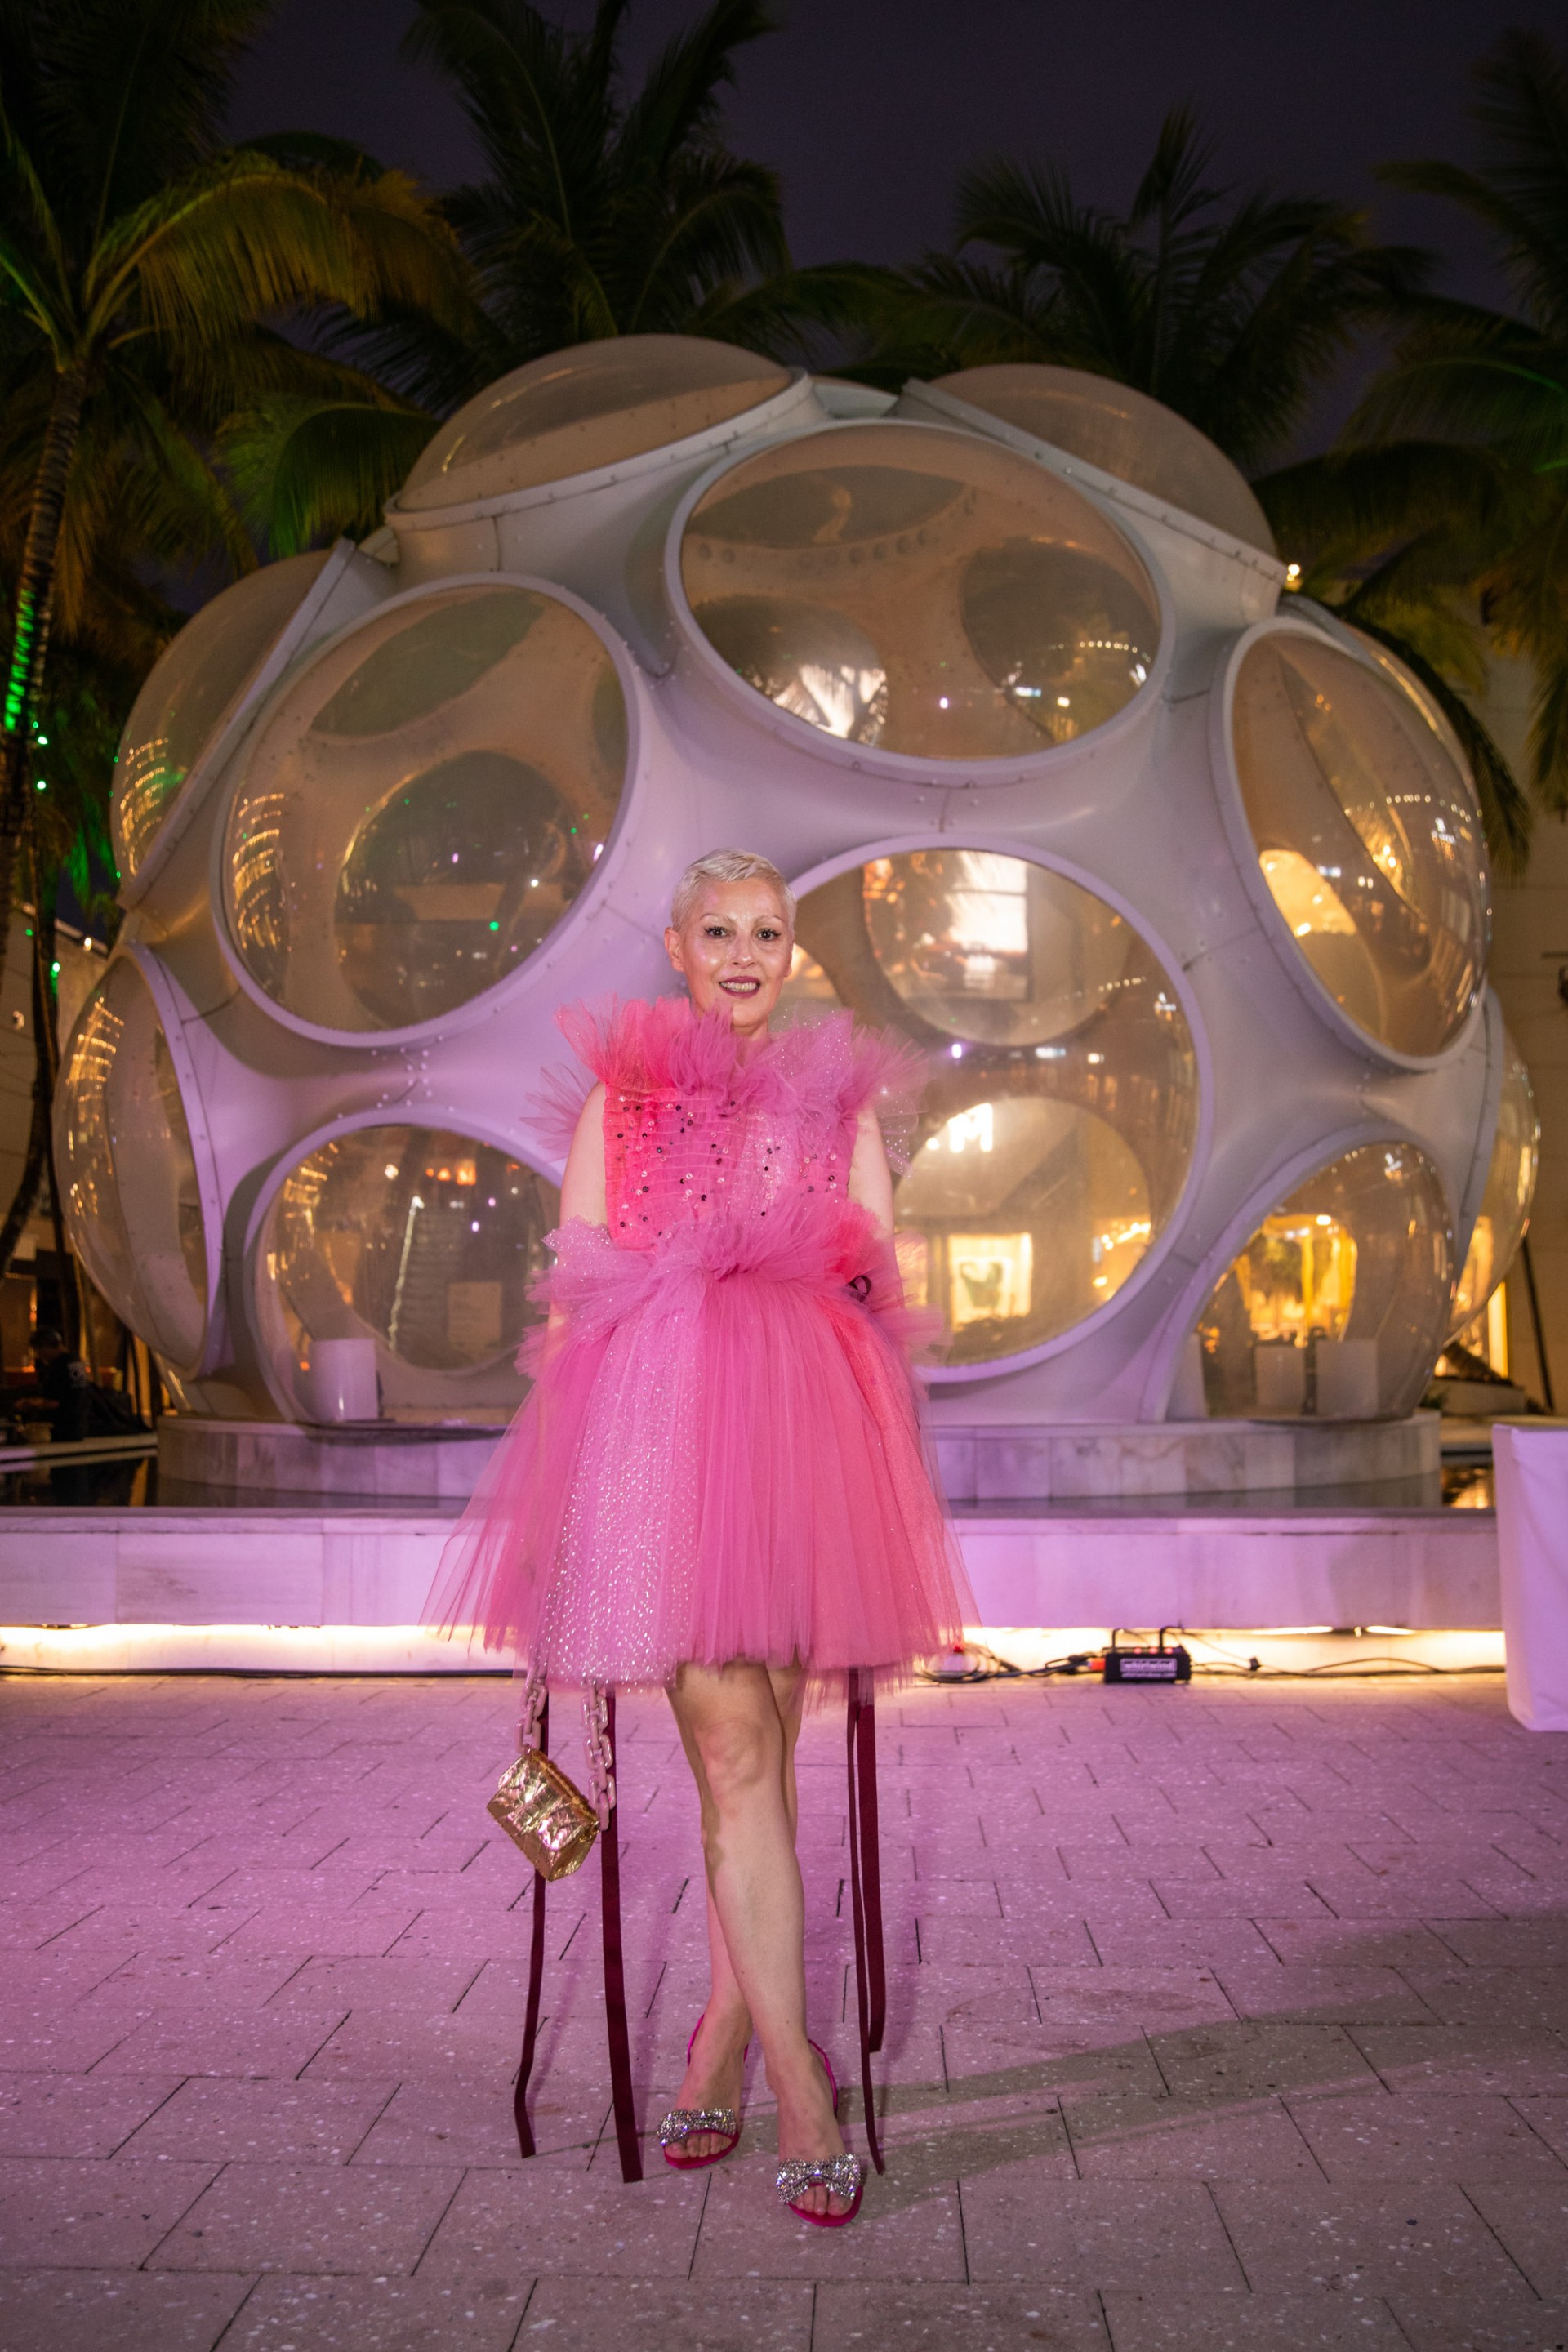 Fashion Strikes Cancer Dome Lighting Ceremony